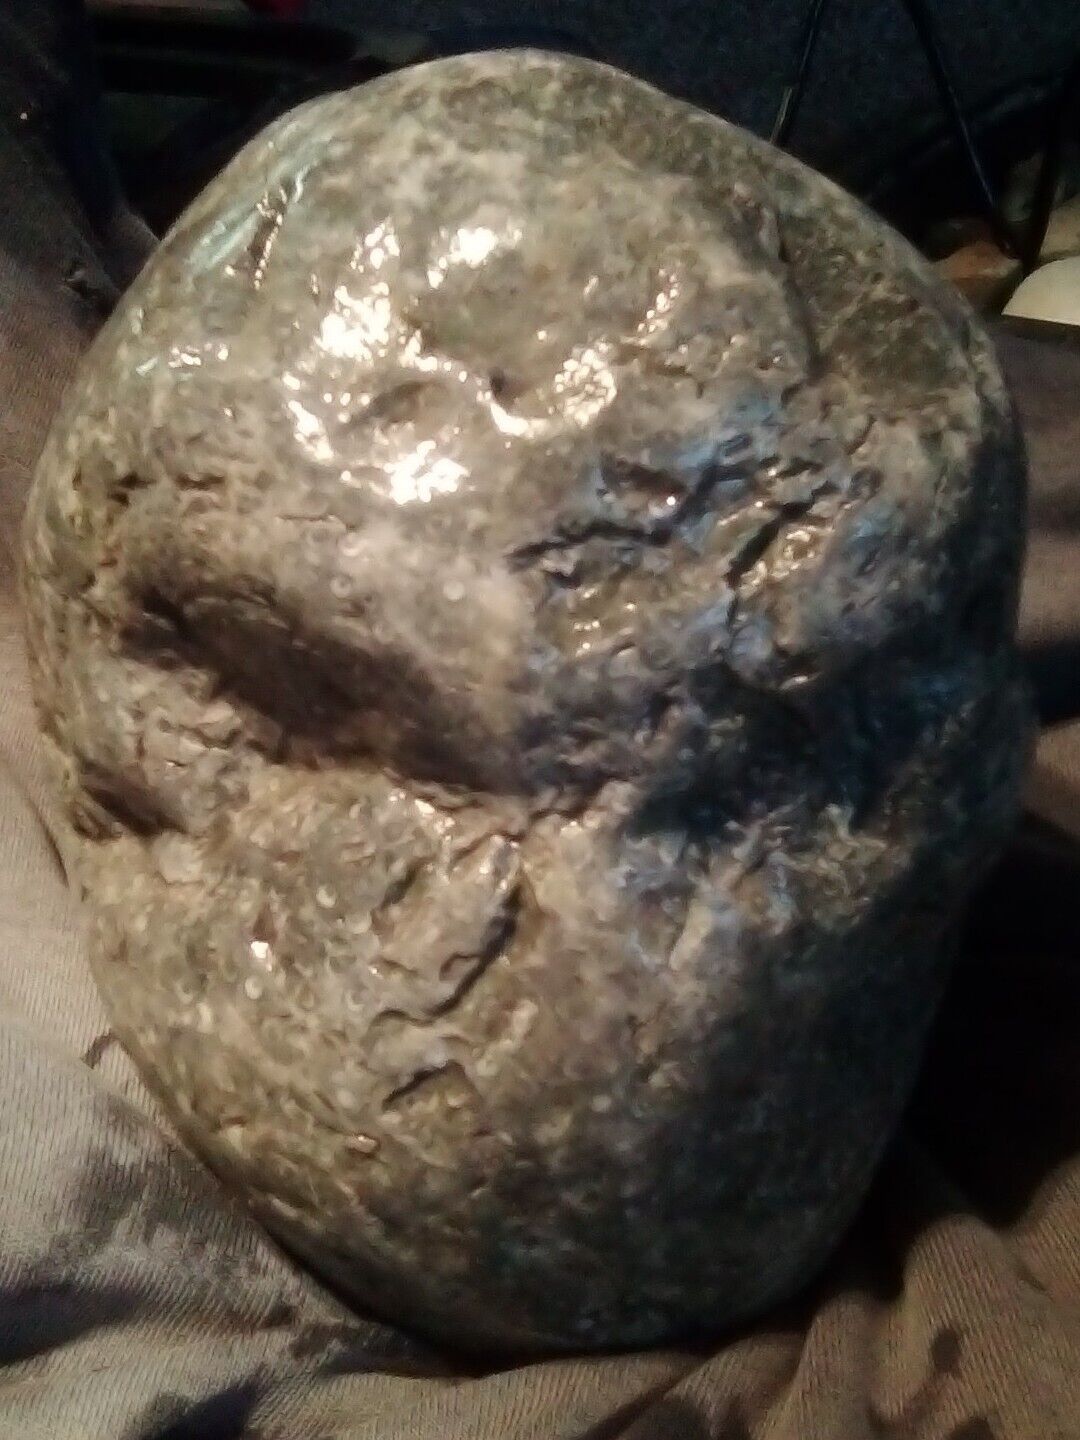 Arrowhead / Native American artifact. Stone Head. Elongated Skull Super Rare